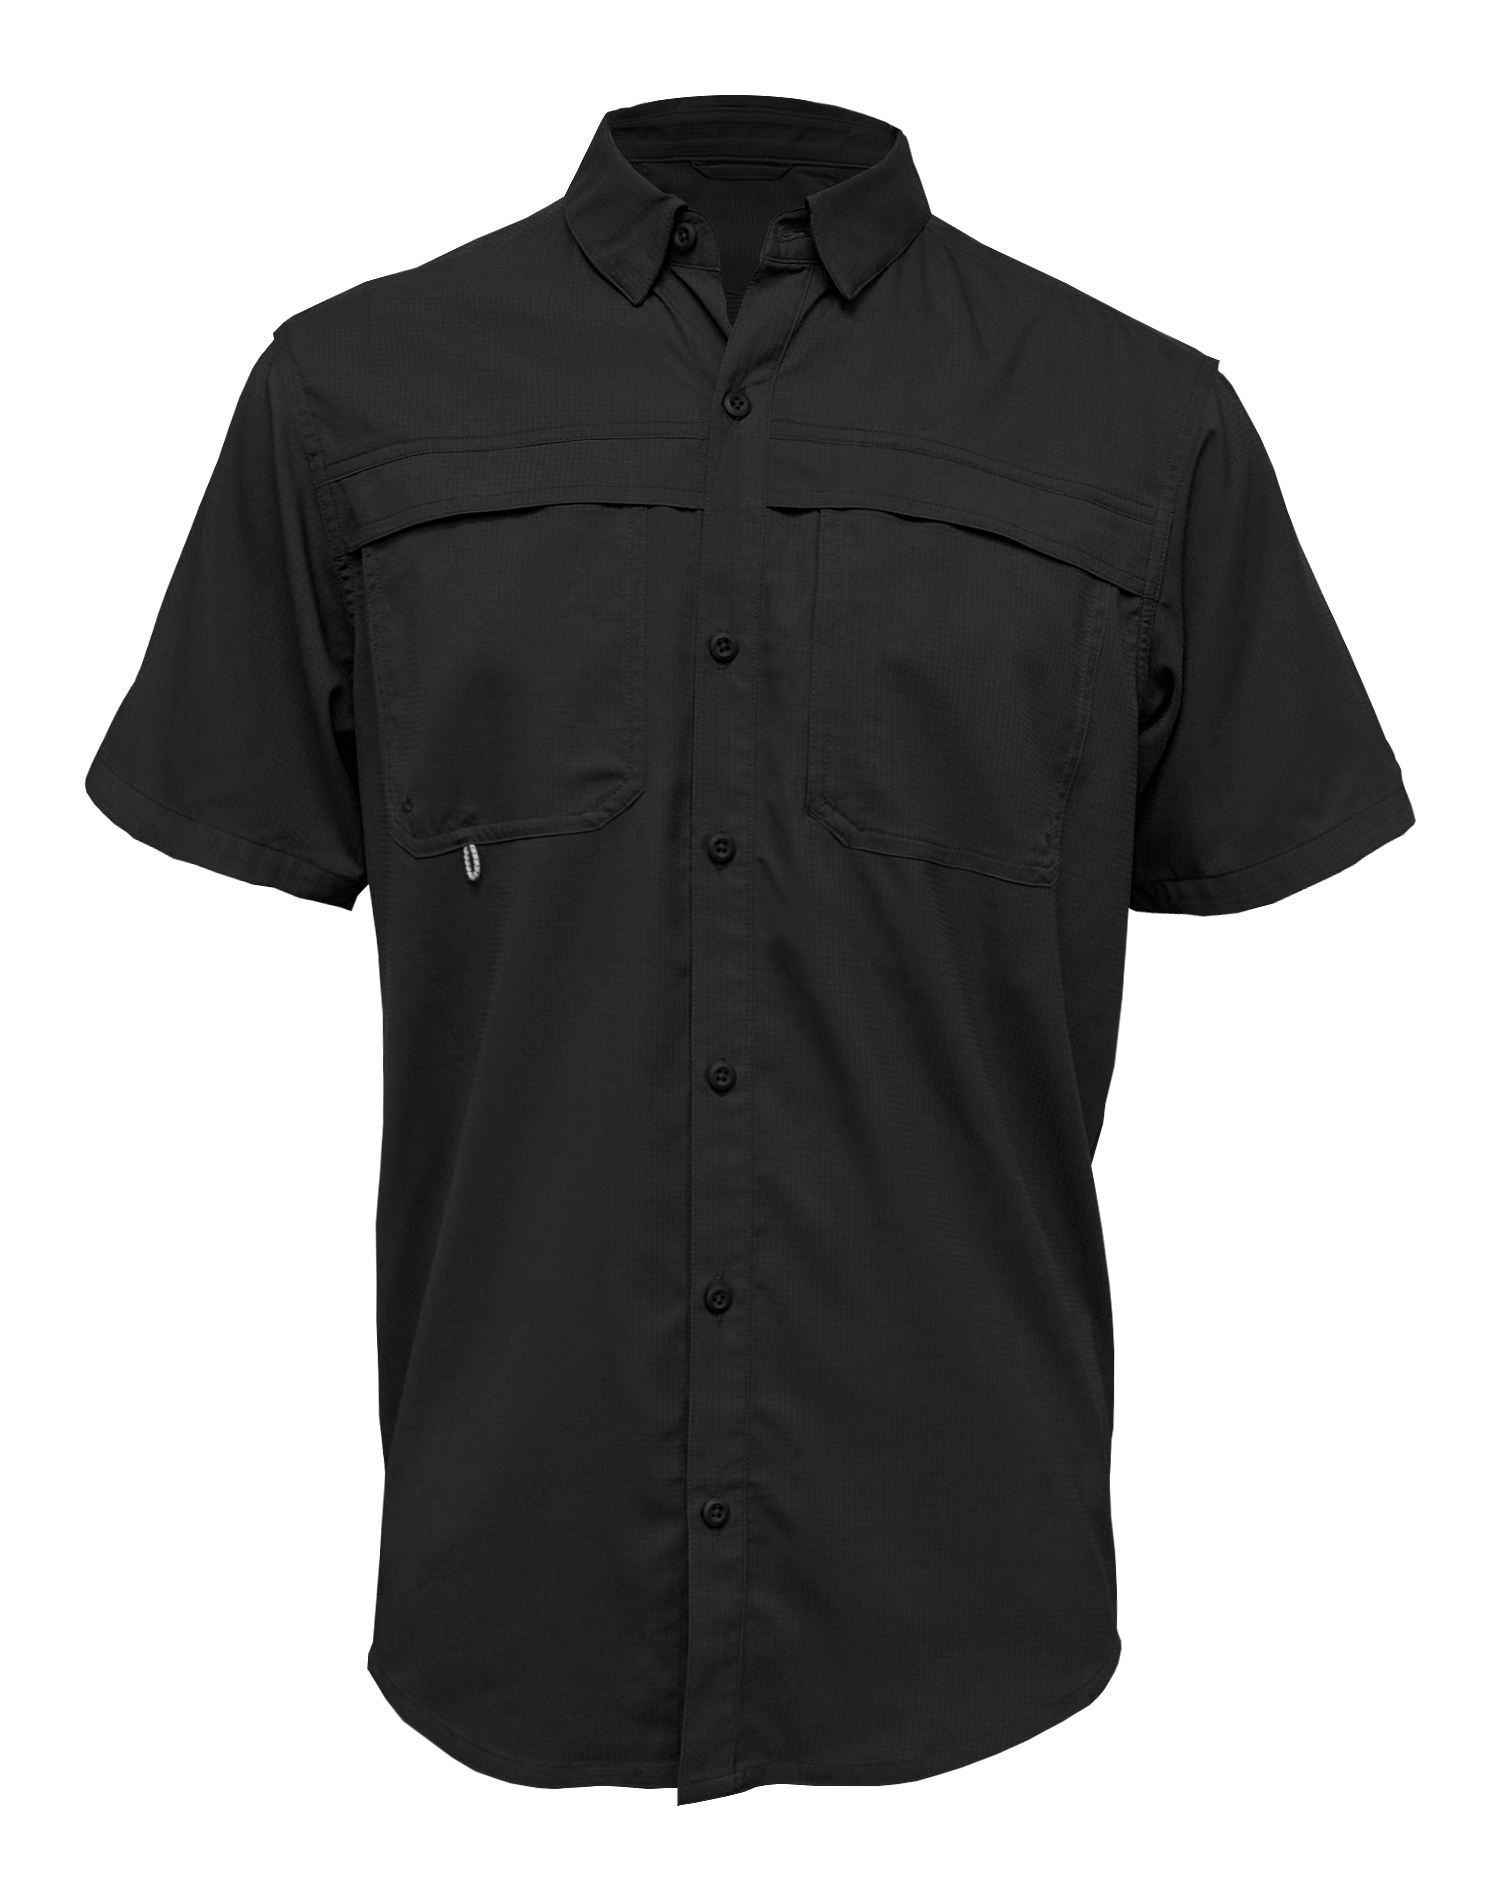 BAW Athletic Wear 3100 adult Short Sleeve Fishing Shirt Black